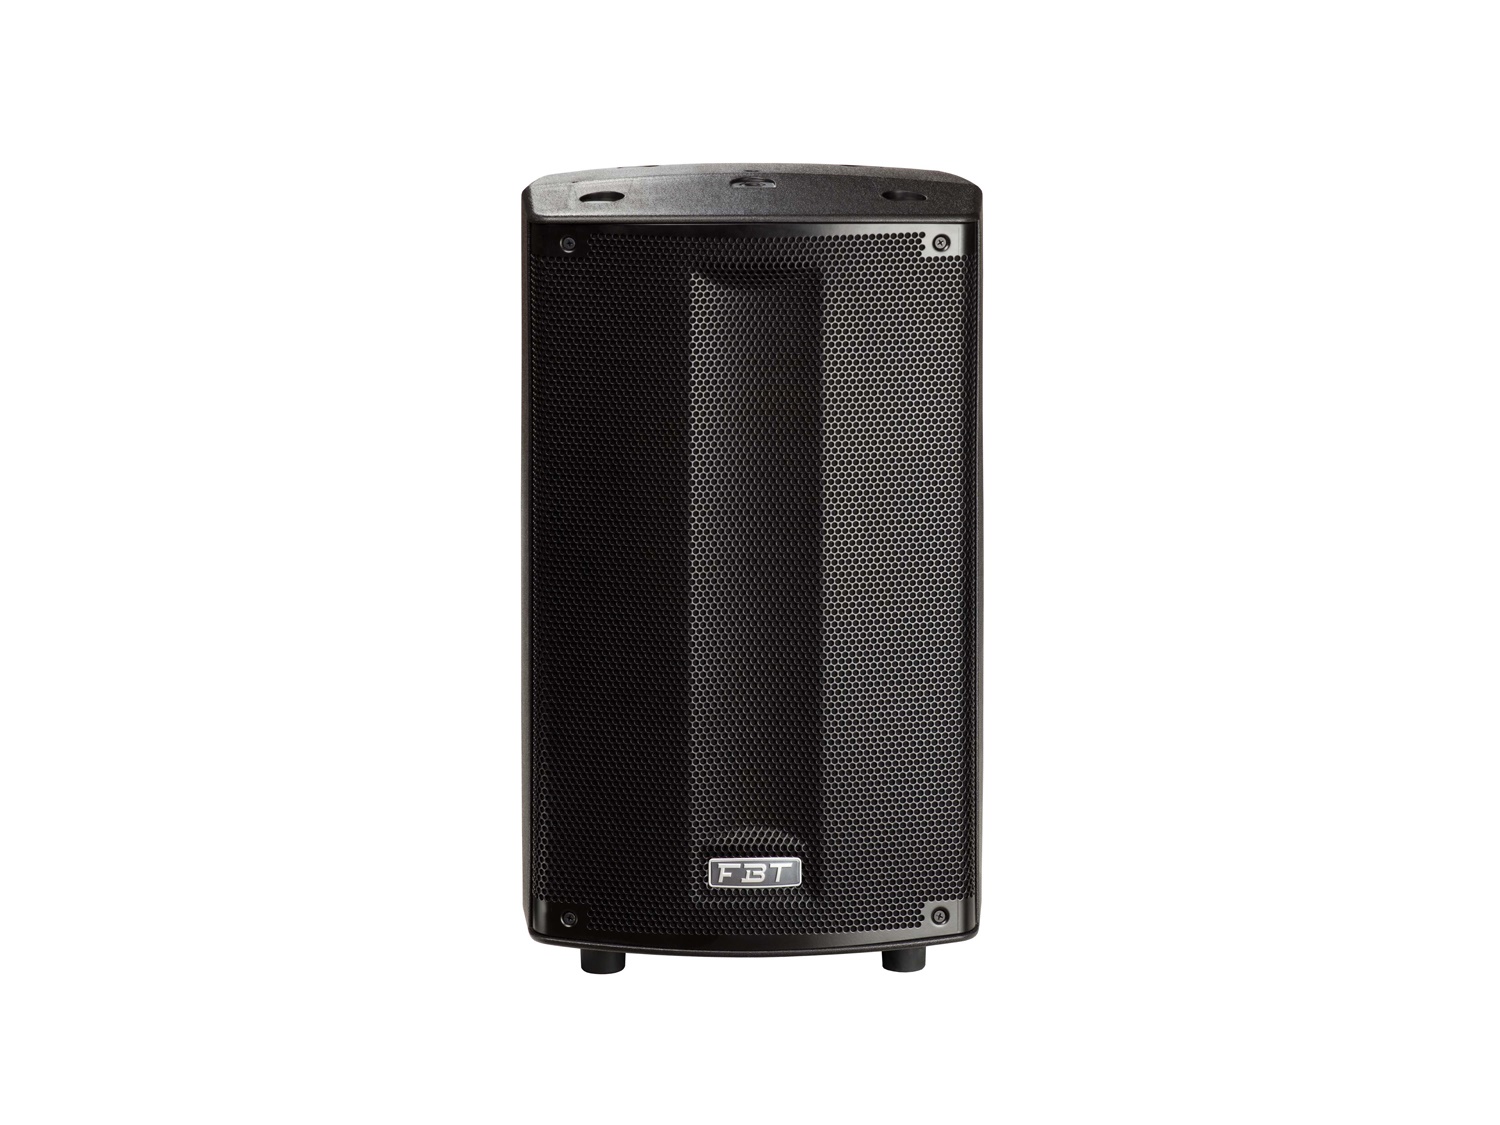 PromaxX114a 2-way Bass Reflex Active Speaker - 14 inch Woofer - 700W/200W RMS by FBT